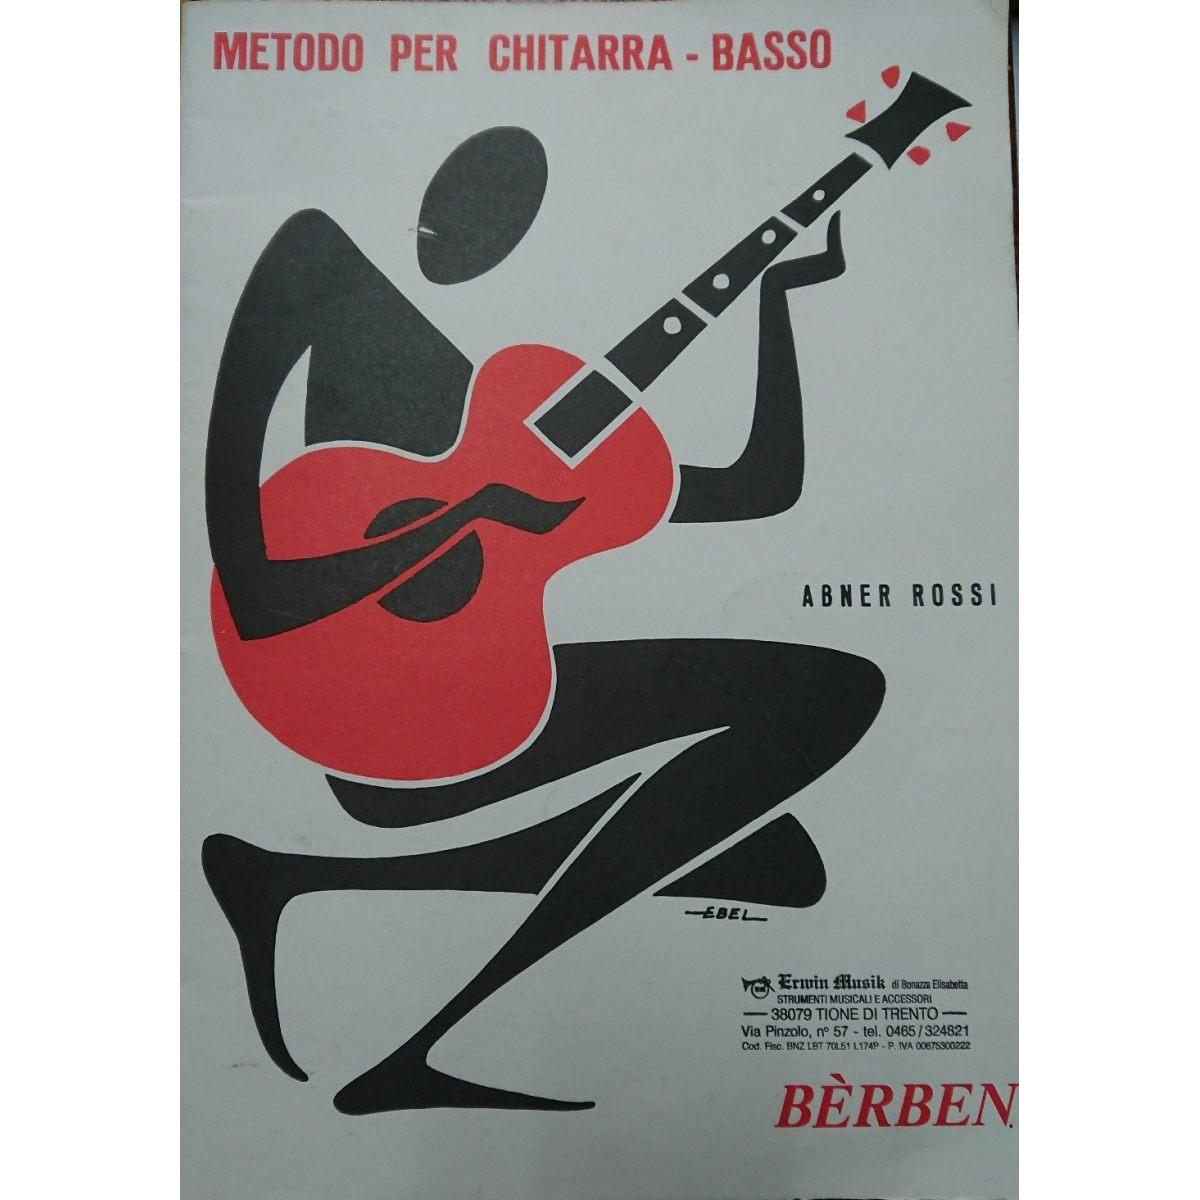 Berben metodo per chitarra basso abner rossi